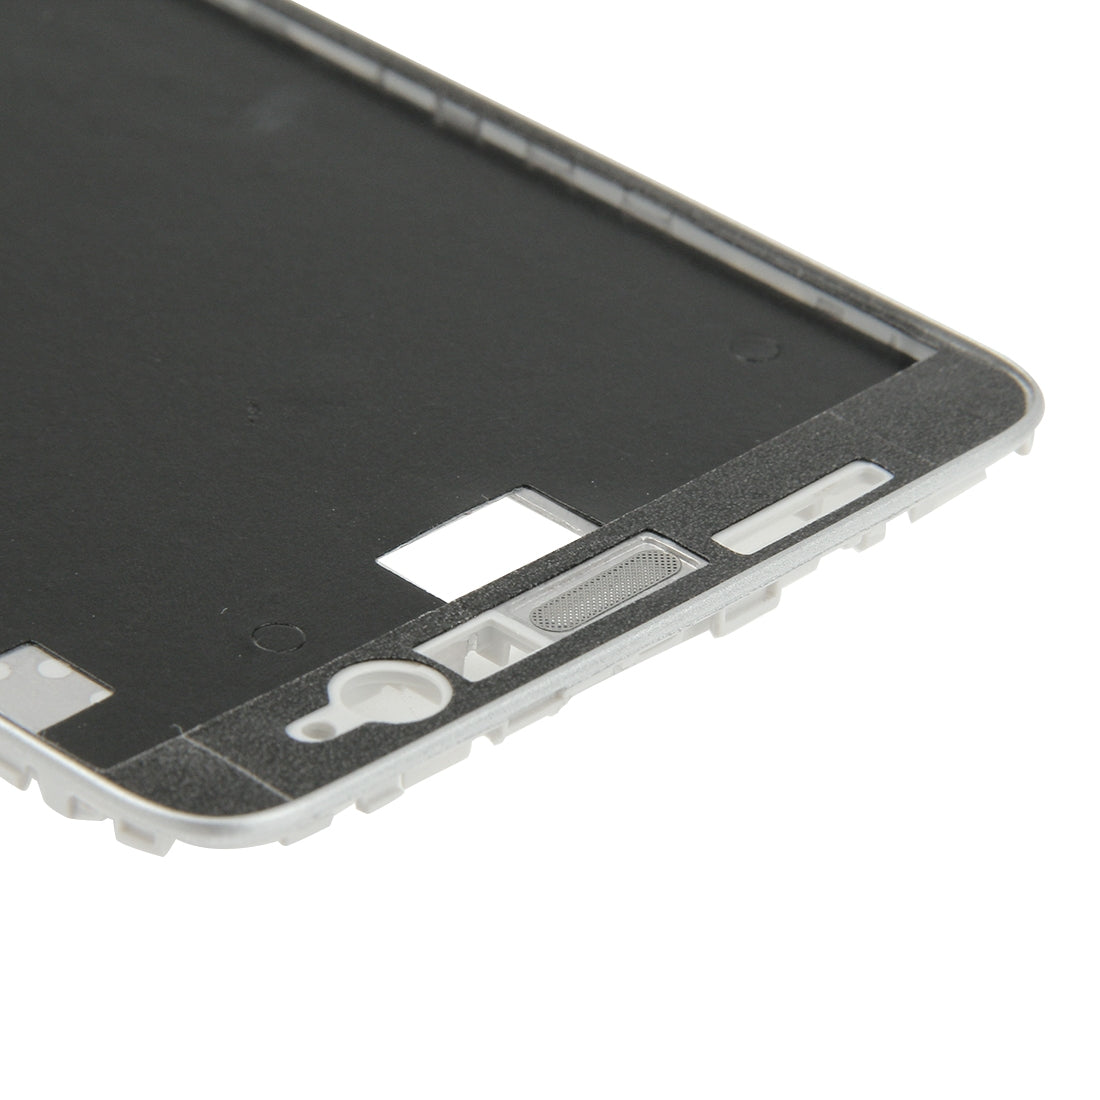 Chassis Intermediate Frame LCD Xiaomi Redmi Note 3 White